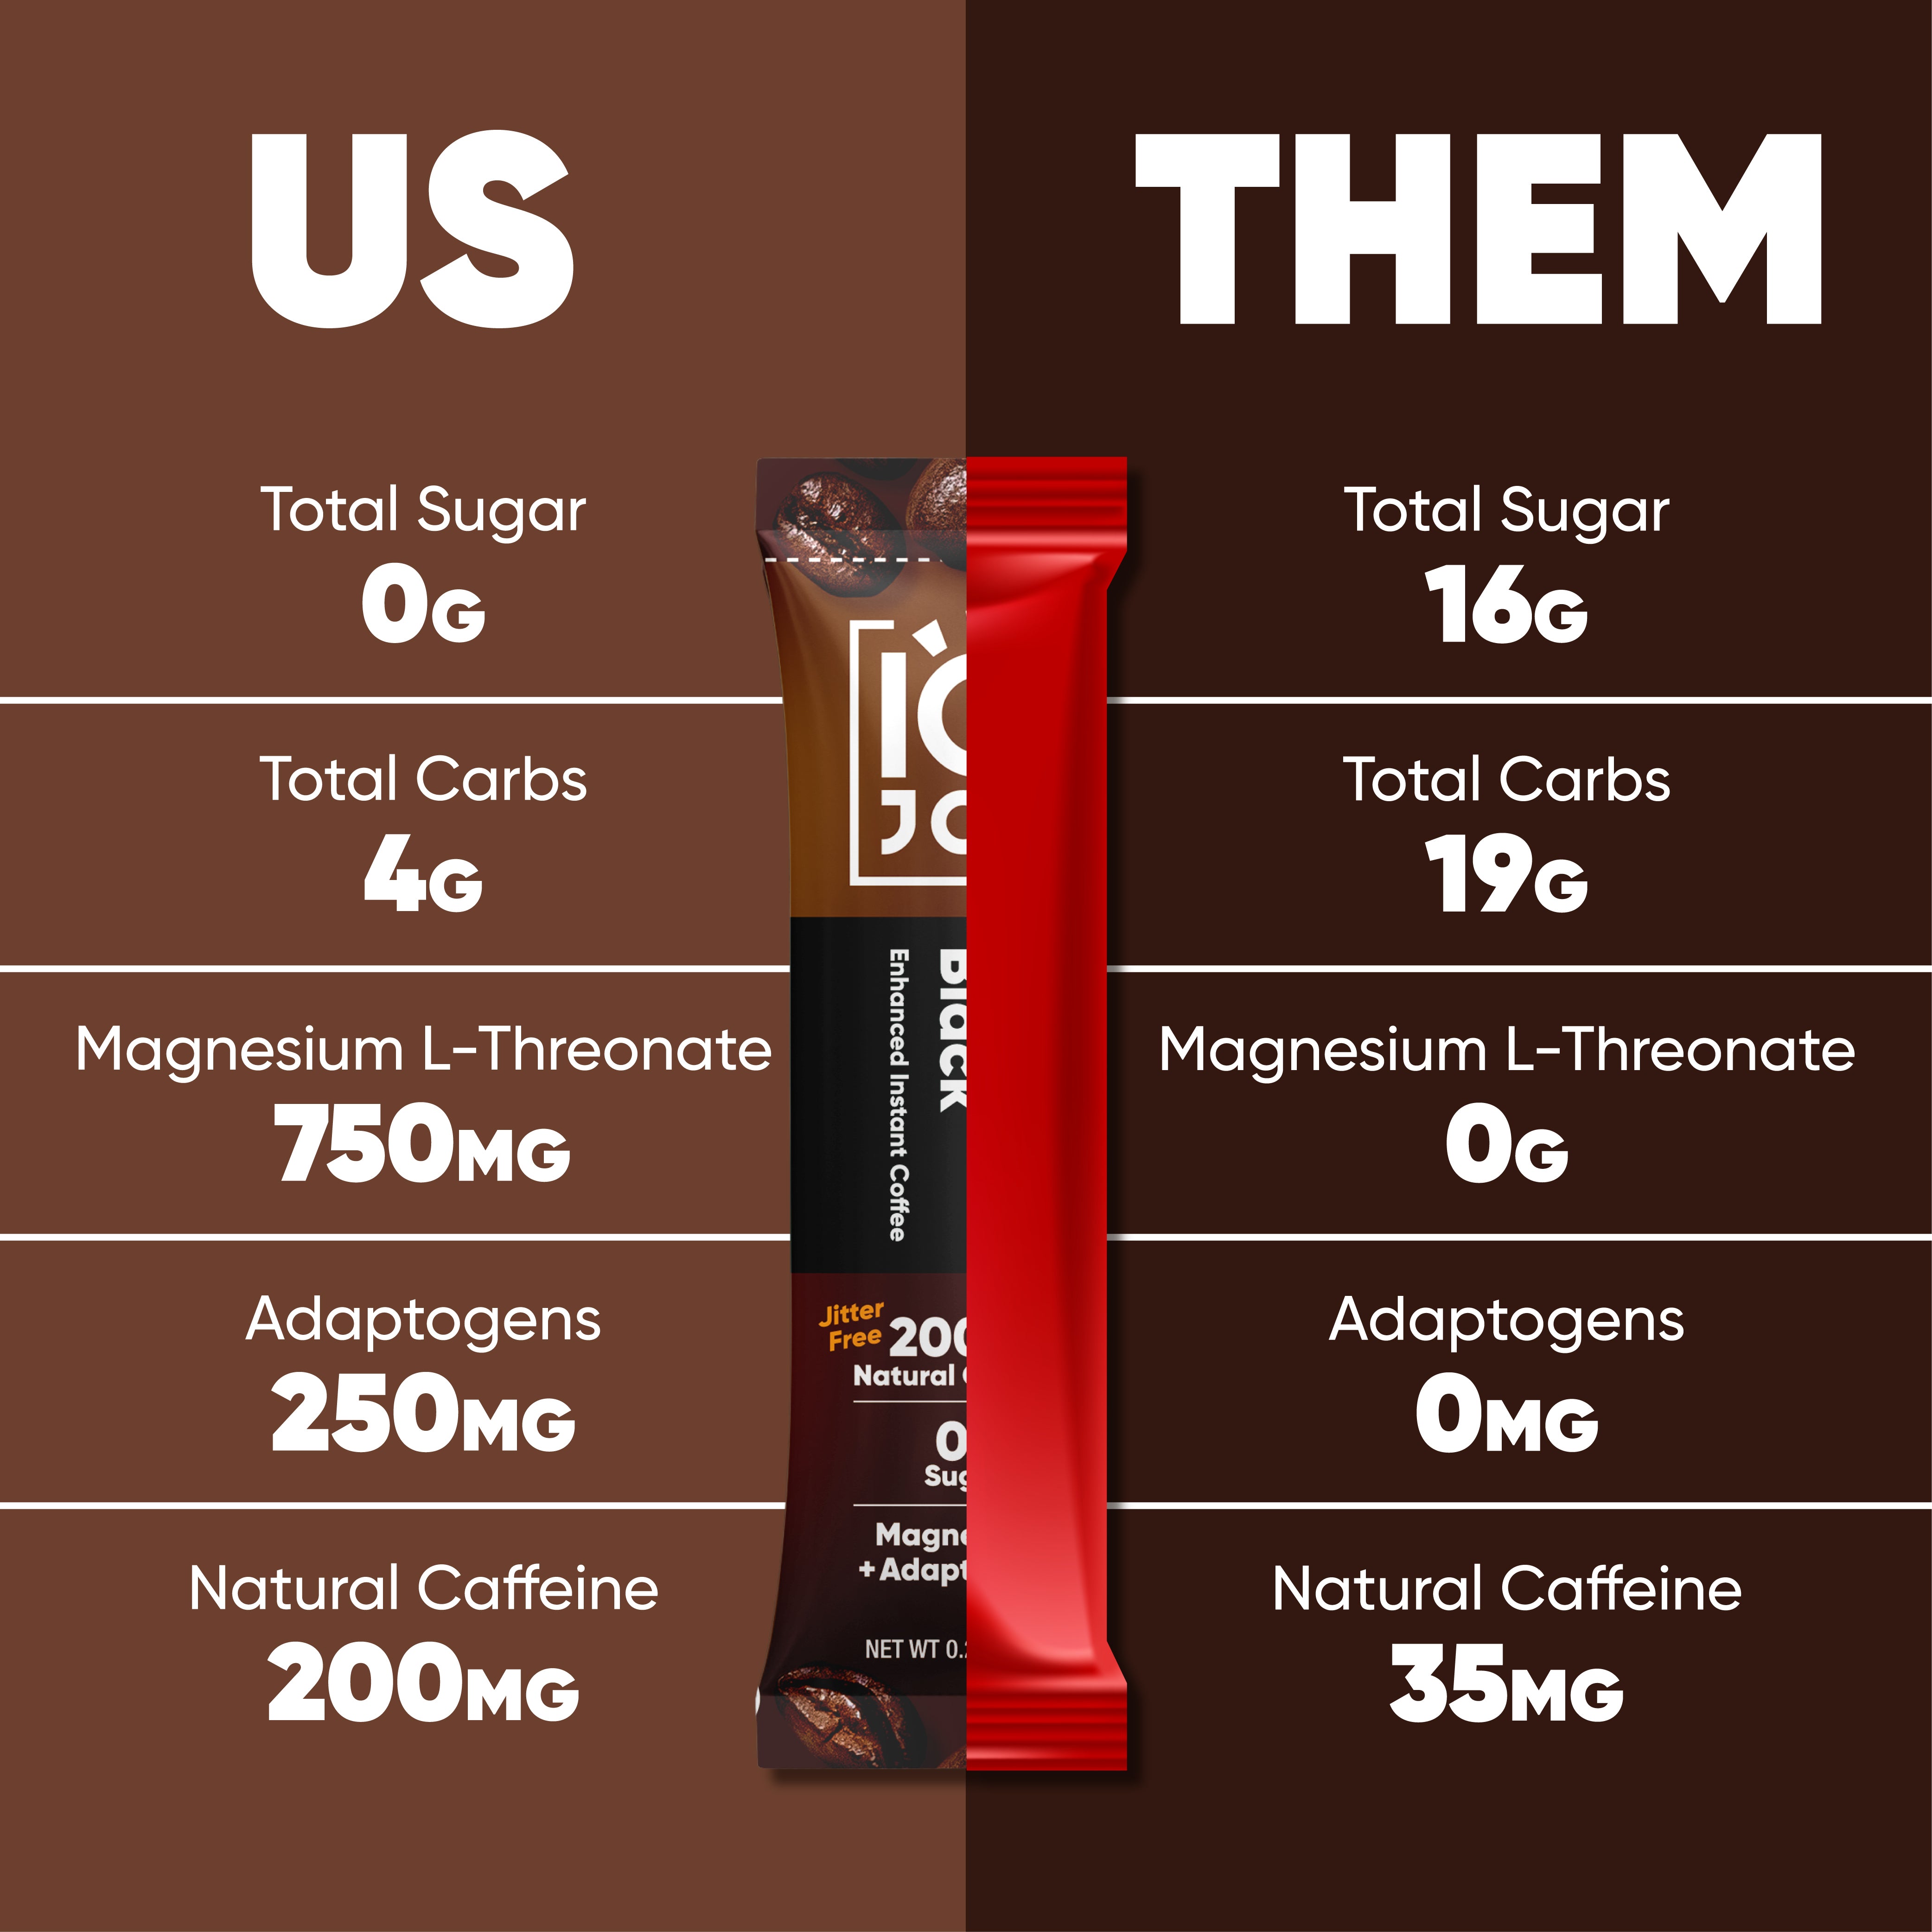 IQJOE Original Black is the Best Mushroom Coffee. 0G Sugar, 4G Carbs, 750mg Magesium L-Threonate, 250mg Adaptogens, 200mg of Caffeine.